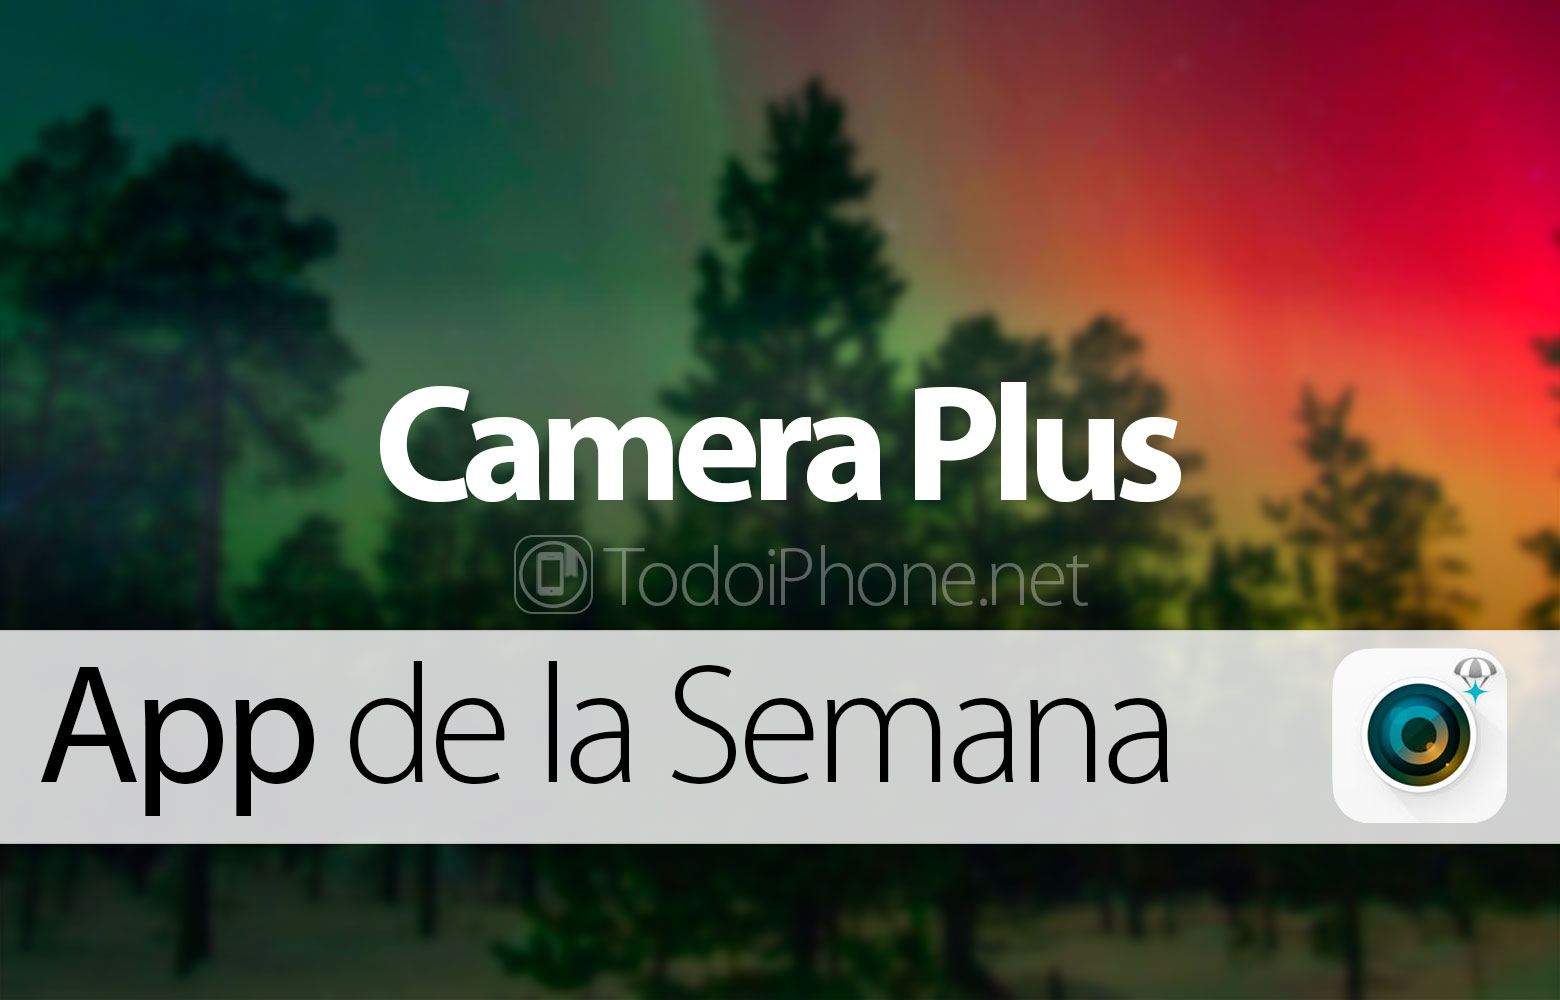 Camera Plus - Ứng dụng iTunes tuần này 2